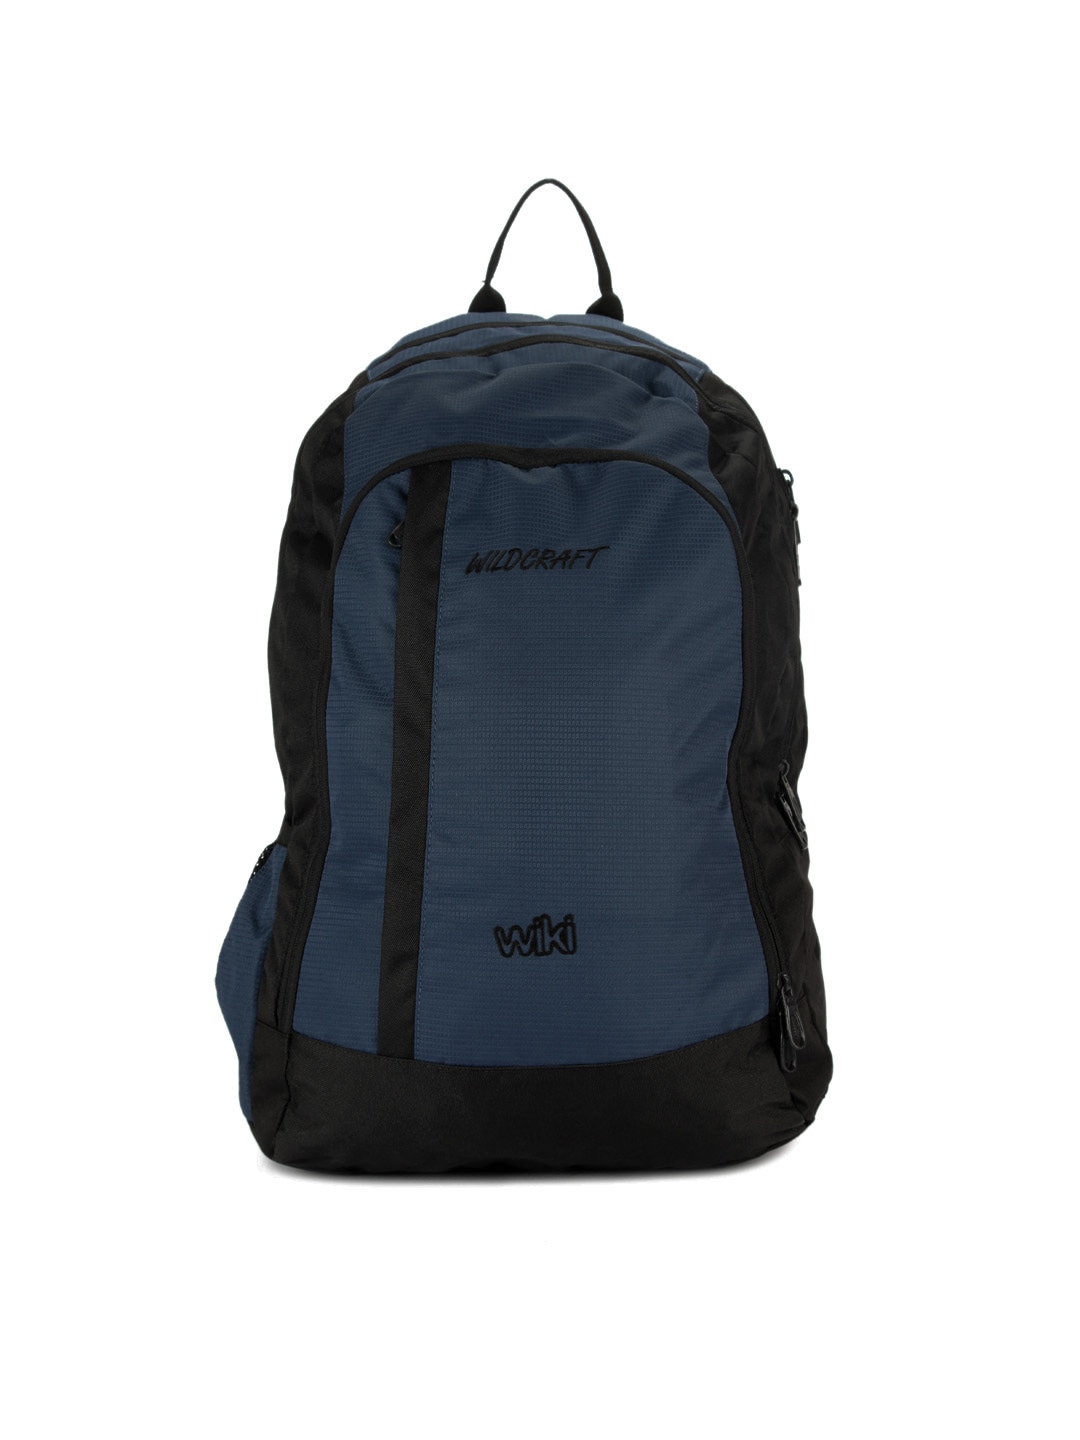 Wildcraft Unisex Blue & Black Backpack